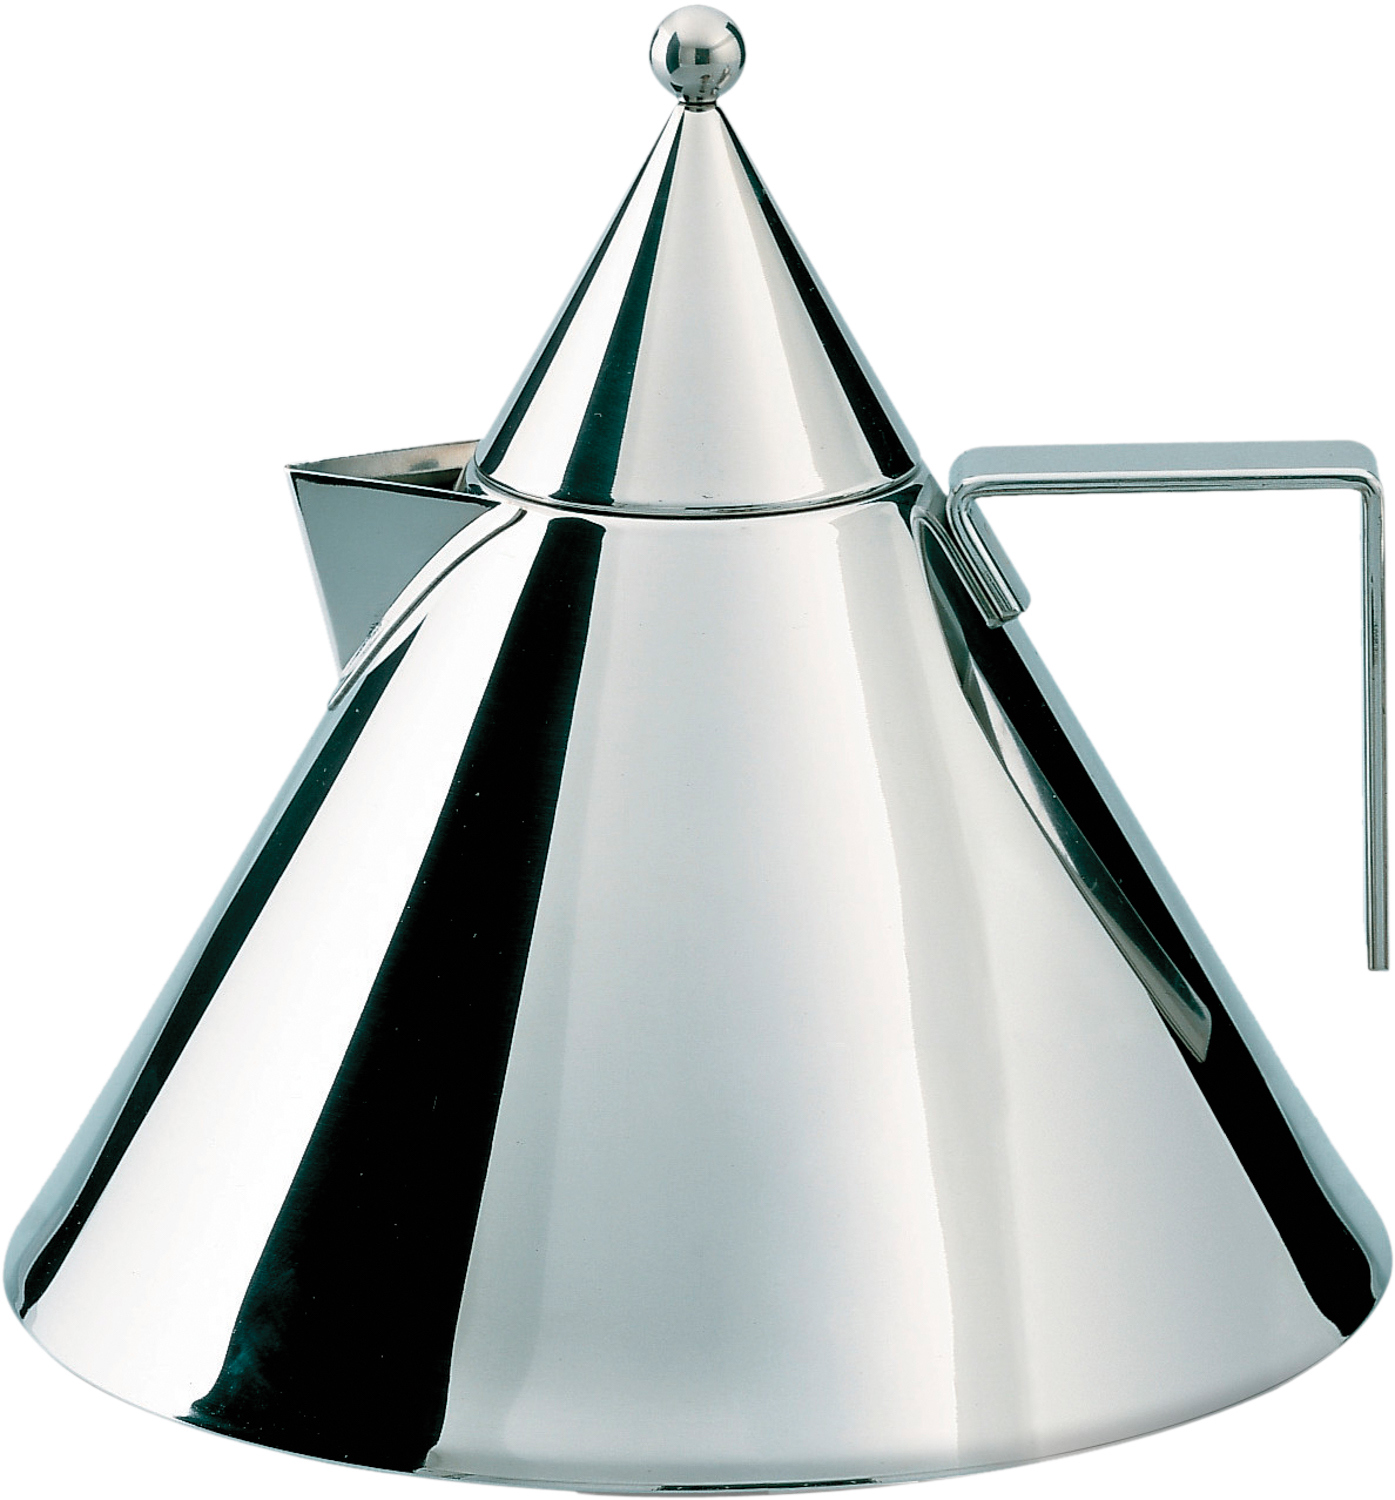 triangular silver kettle